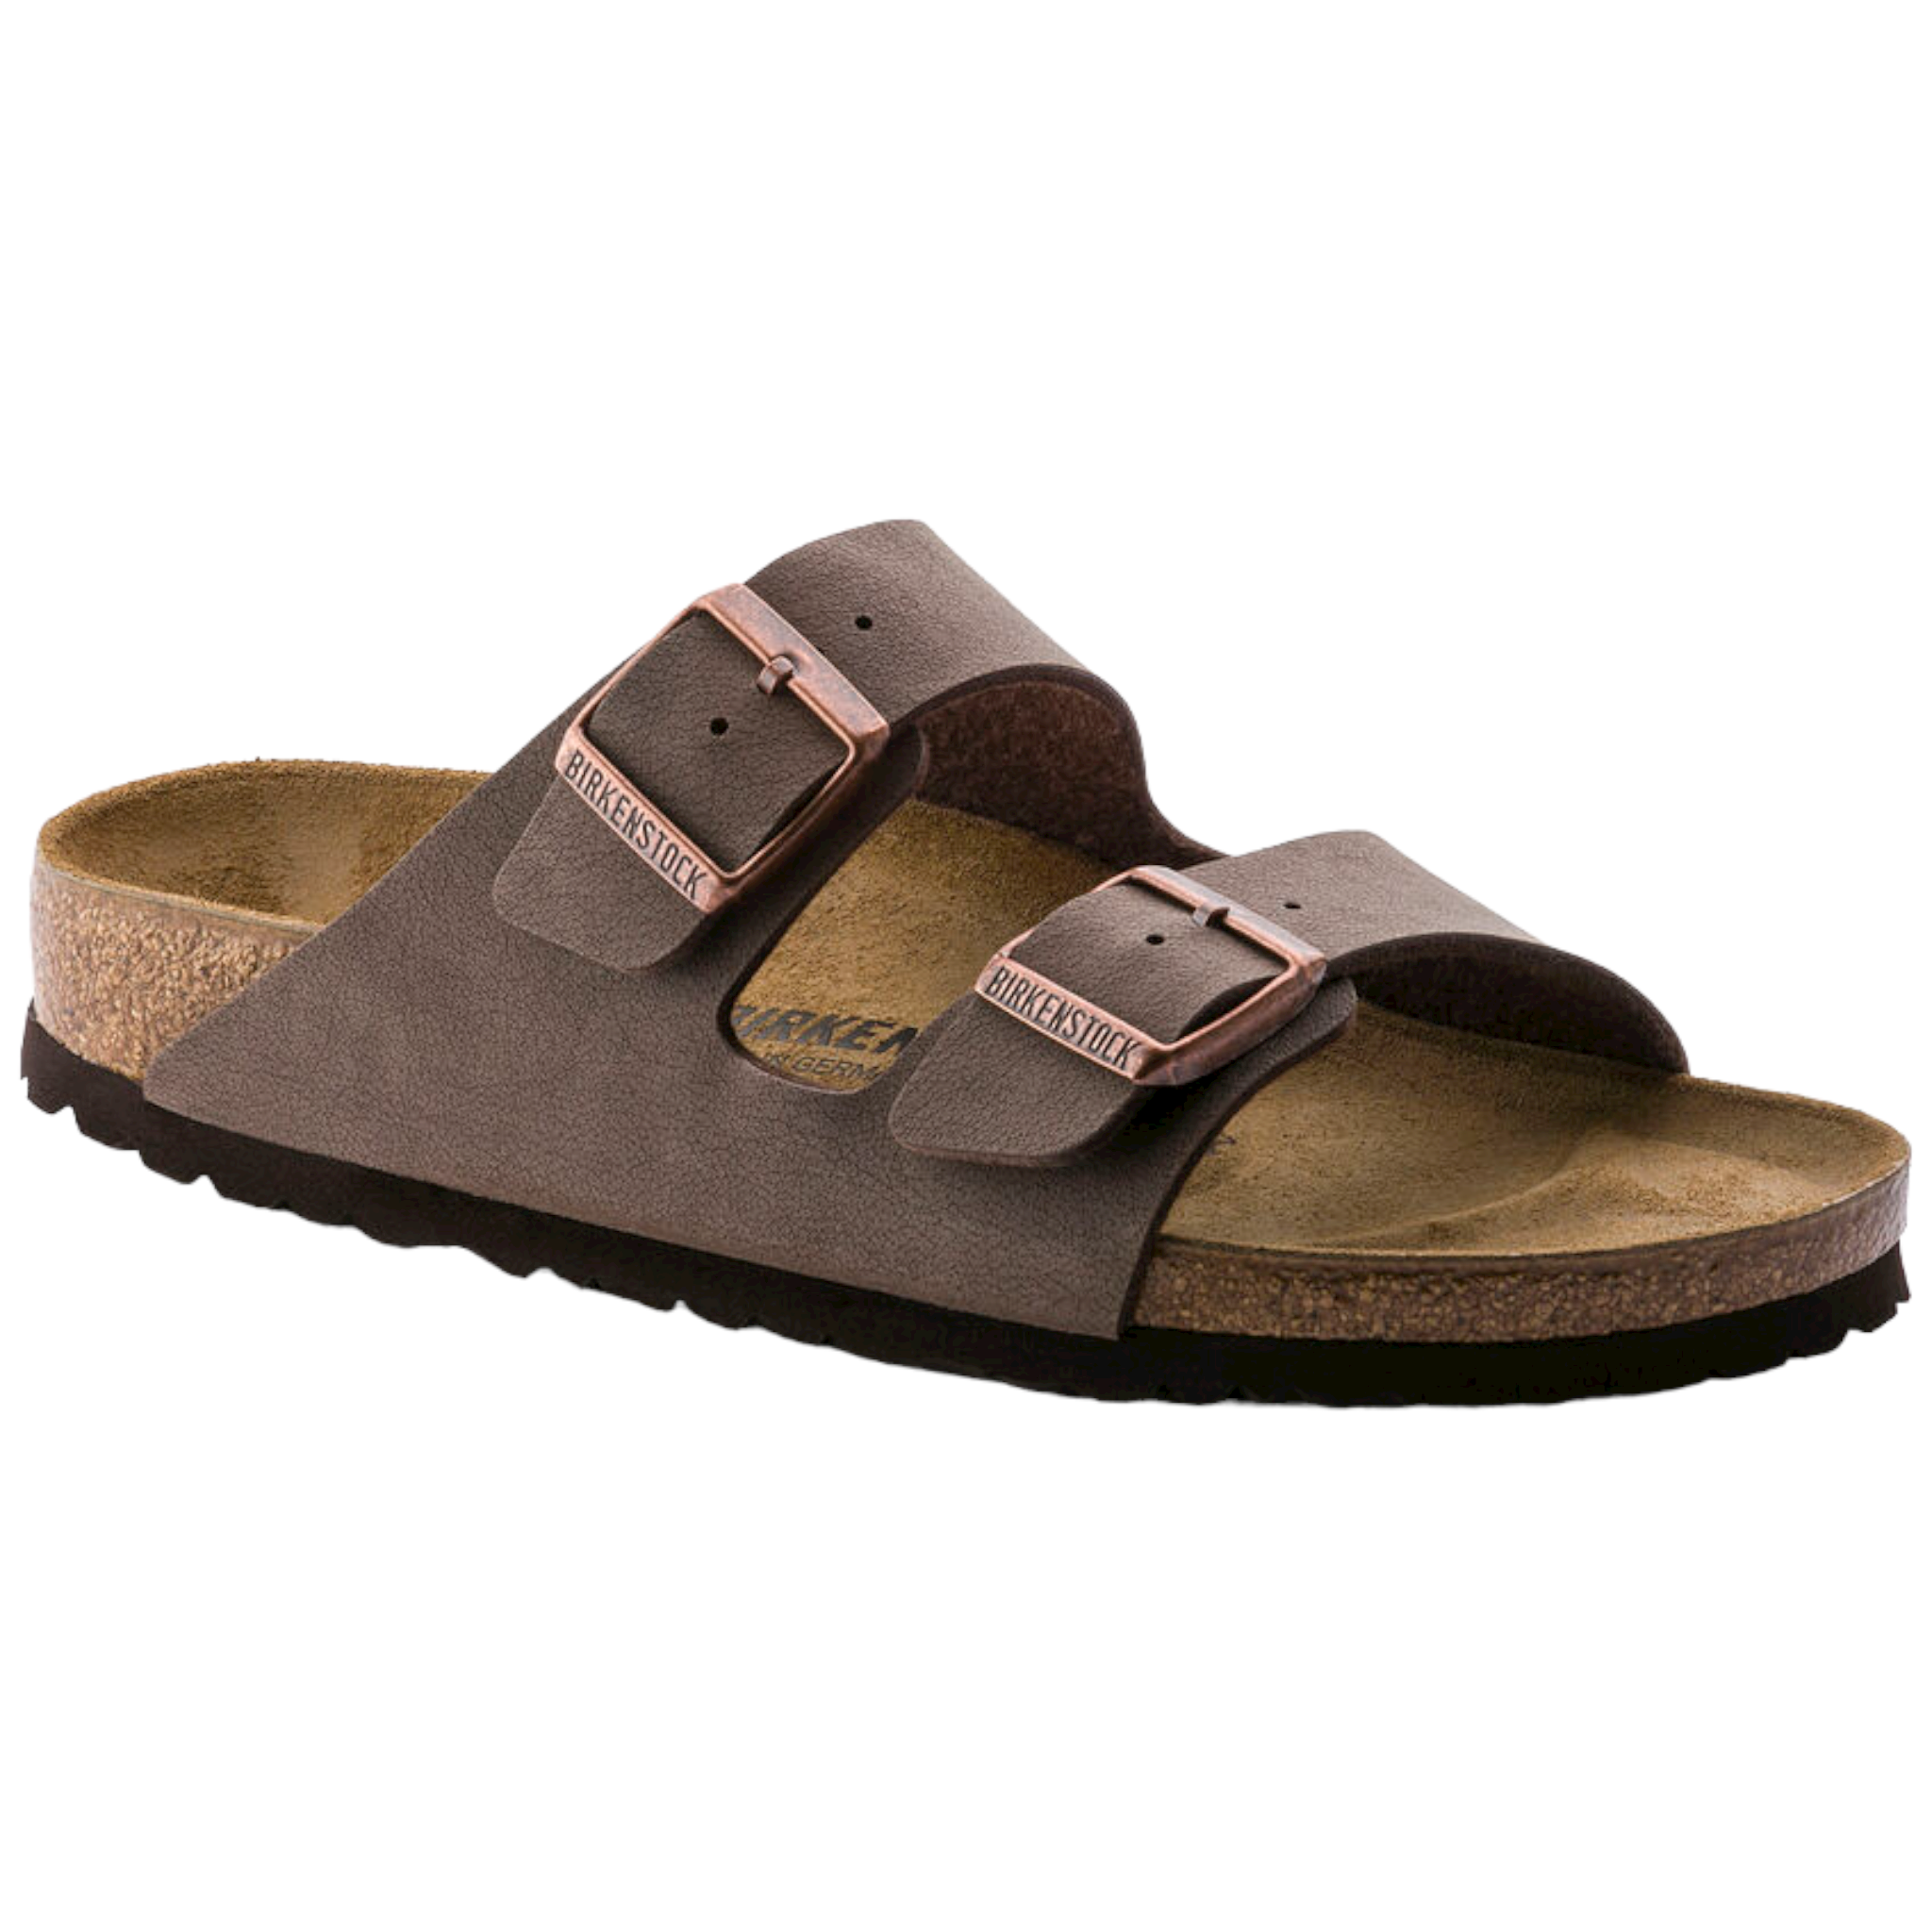 Arizona Birkibuc - shoe&amp;me - Birkenstock - Slide - Sandal, Slides/Scuffs, Unisex